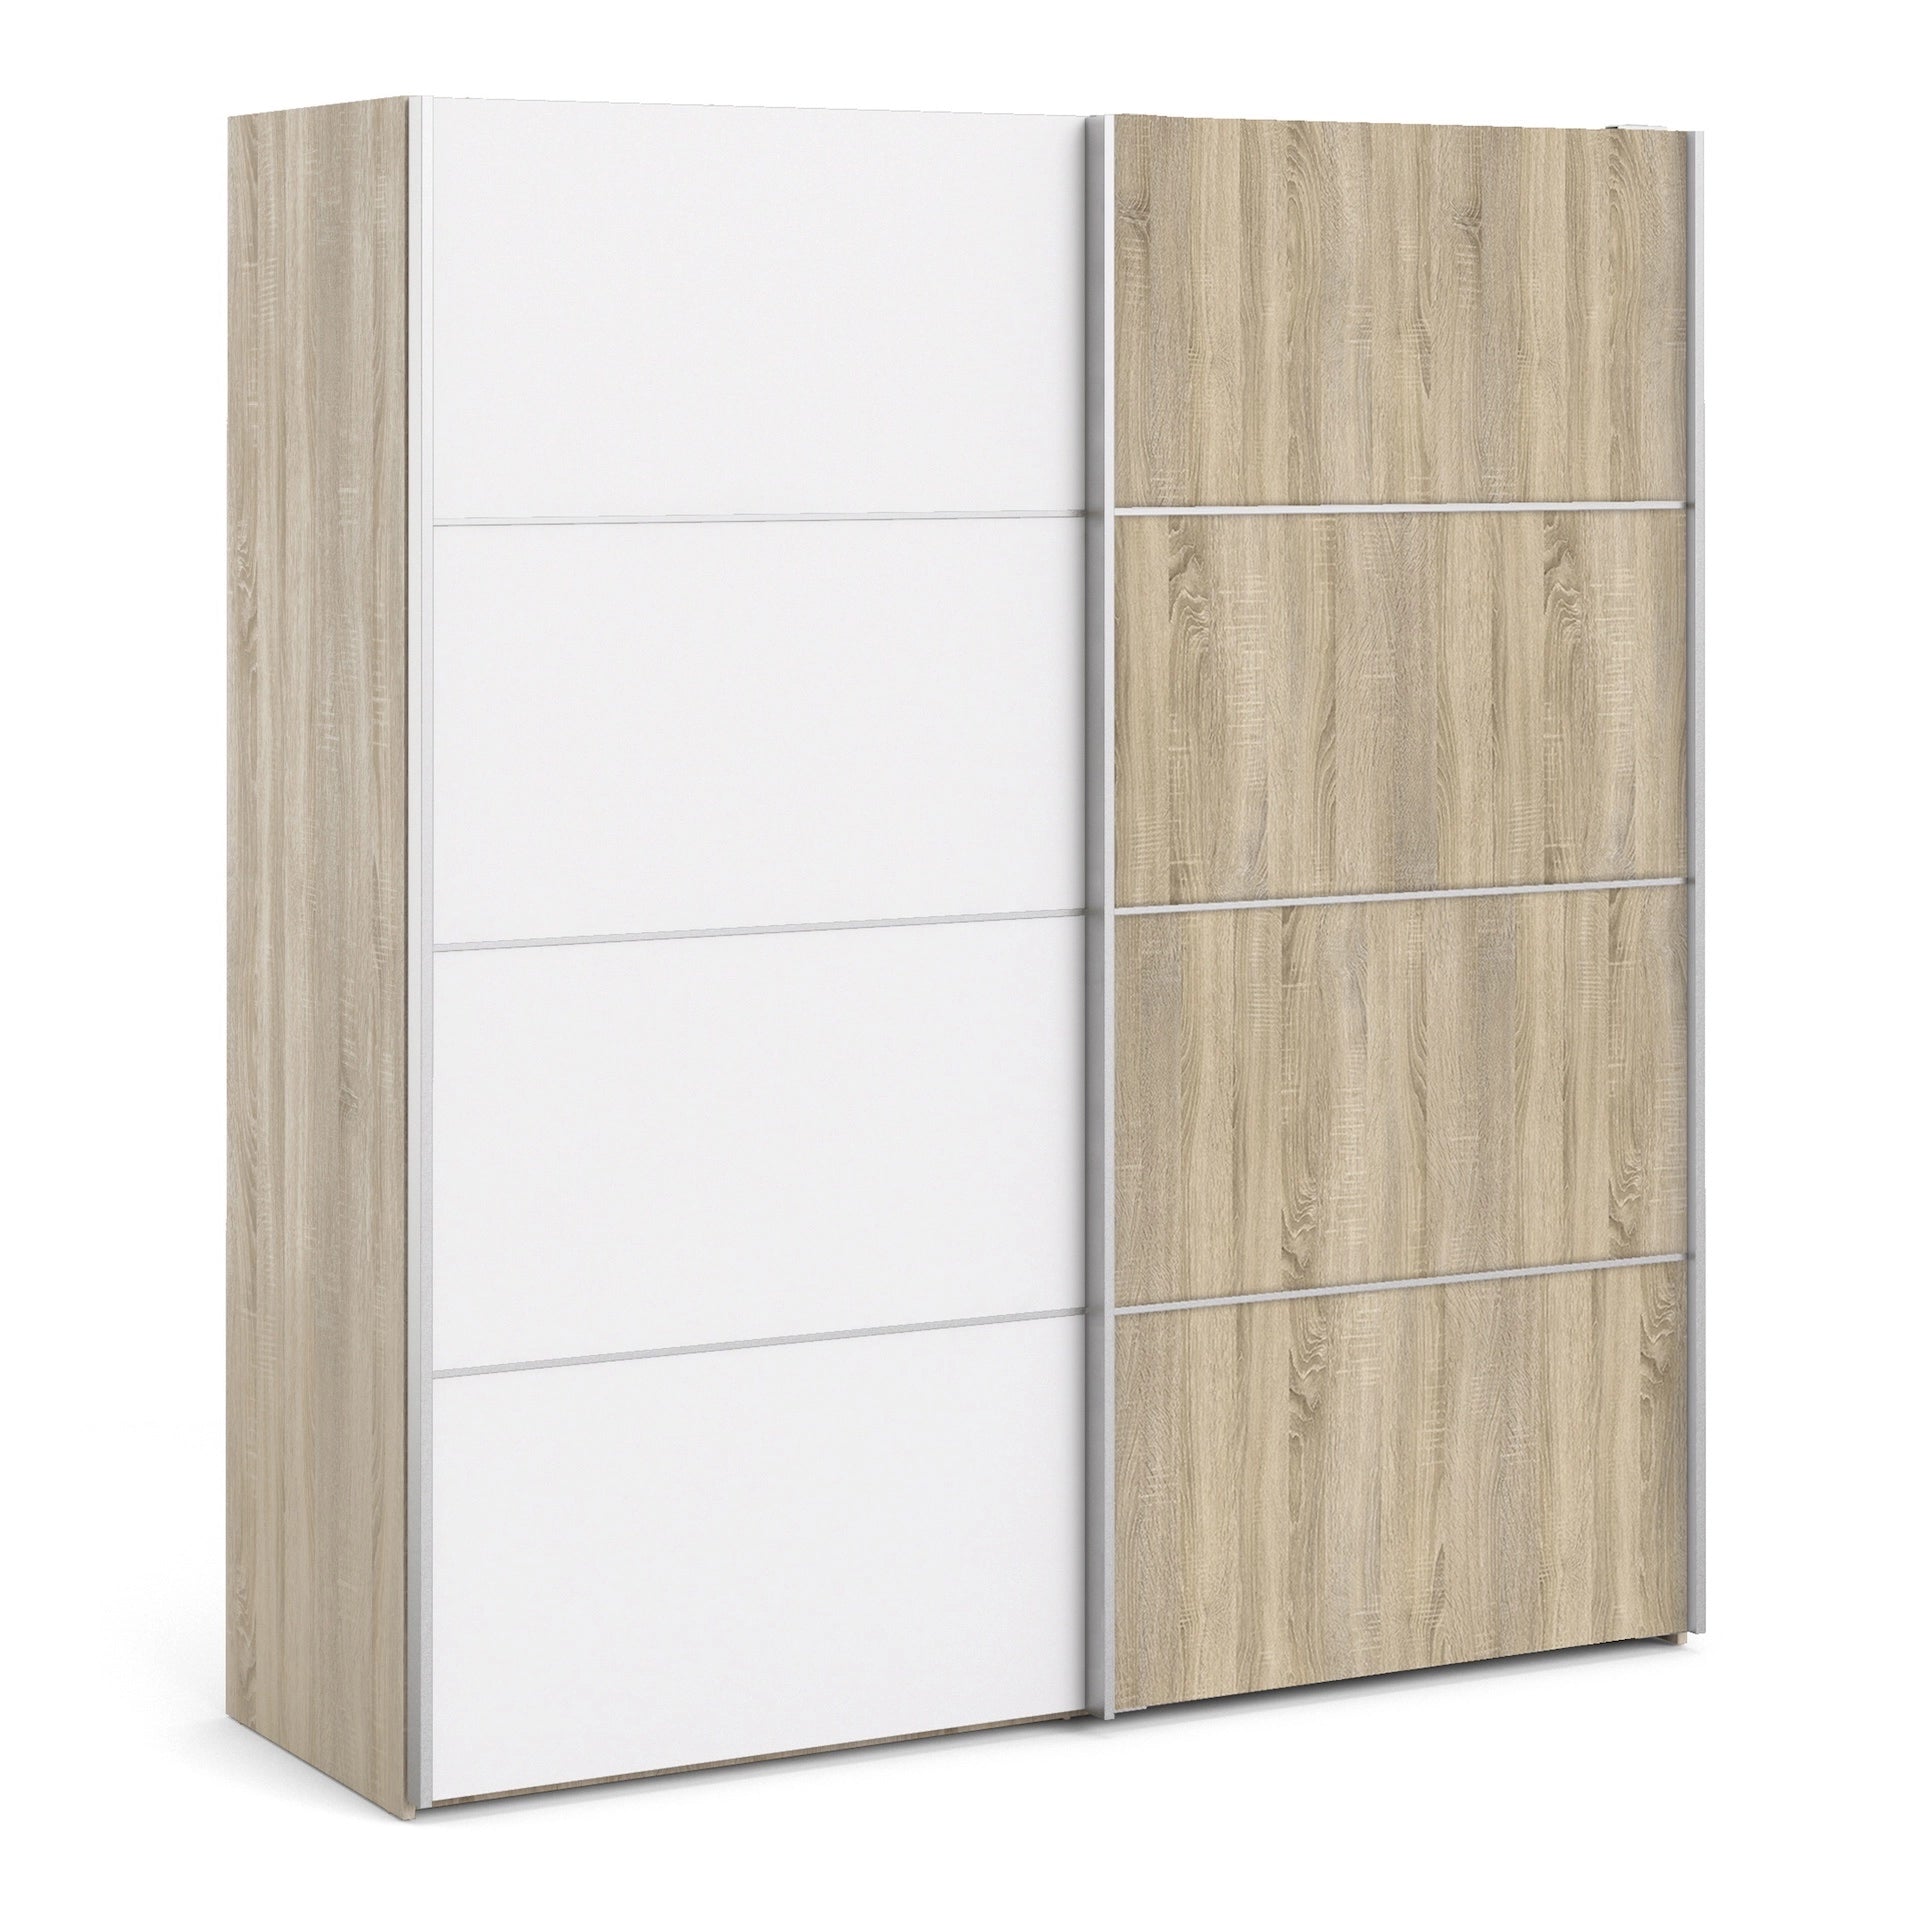 Furniture To Go Verona Sliding Wardrobe 180cm in Oak with White & Oak Doors with 5 Shelves